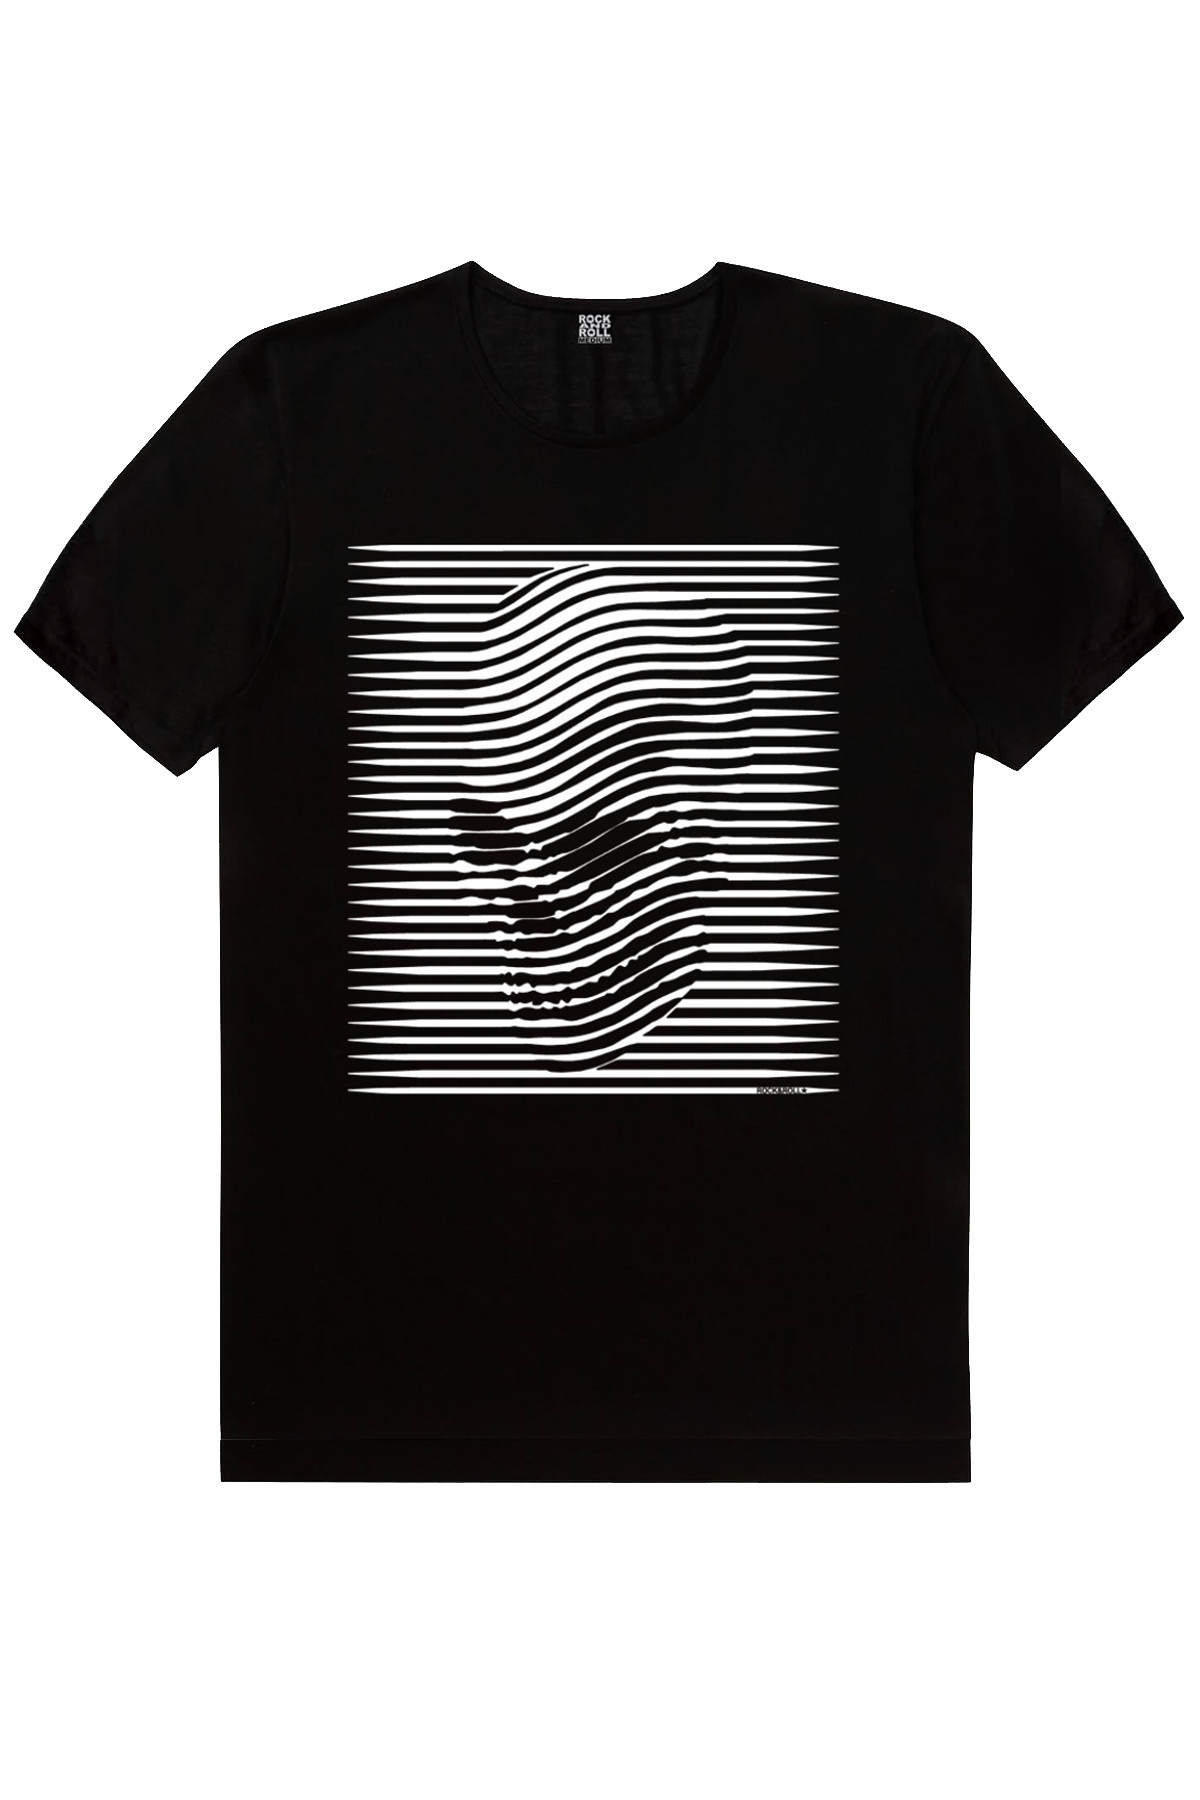 Şerit Kafa Siyah Kısa Kollu Erkek T-shirt